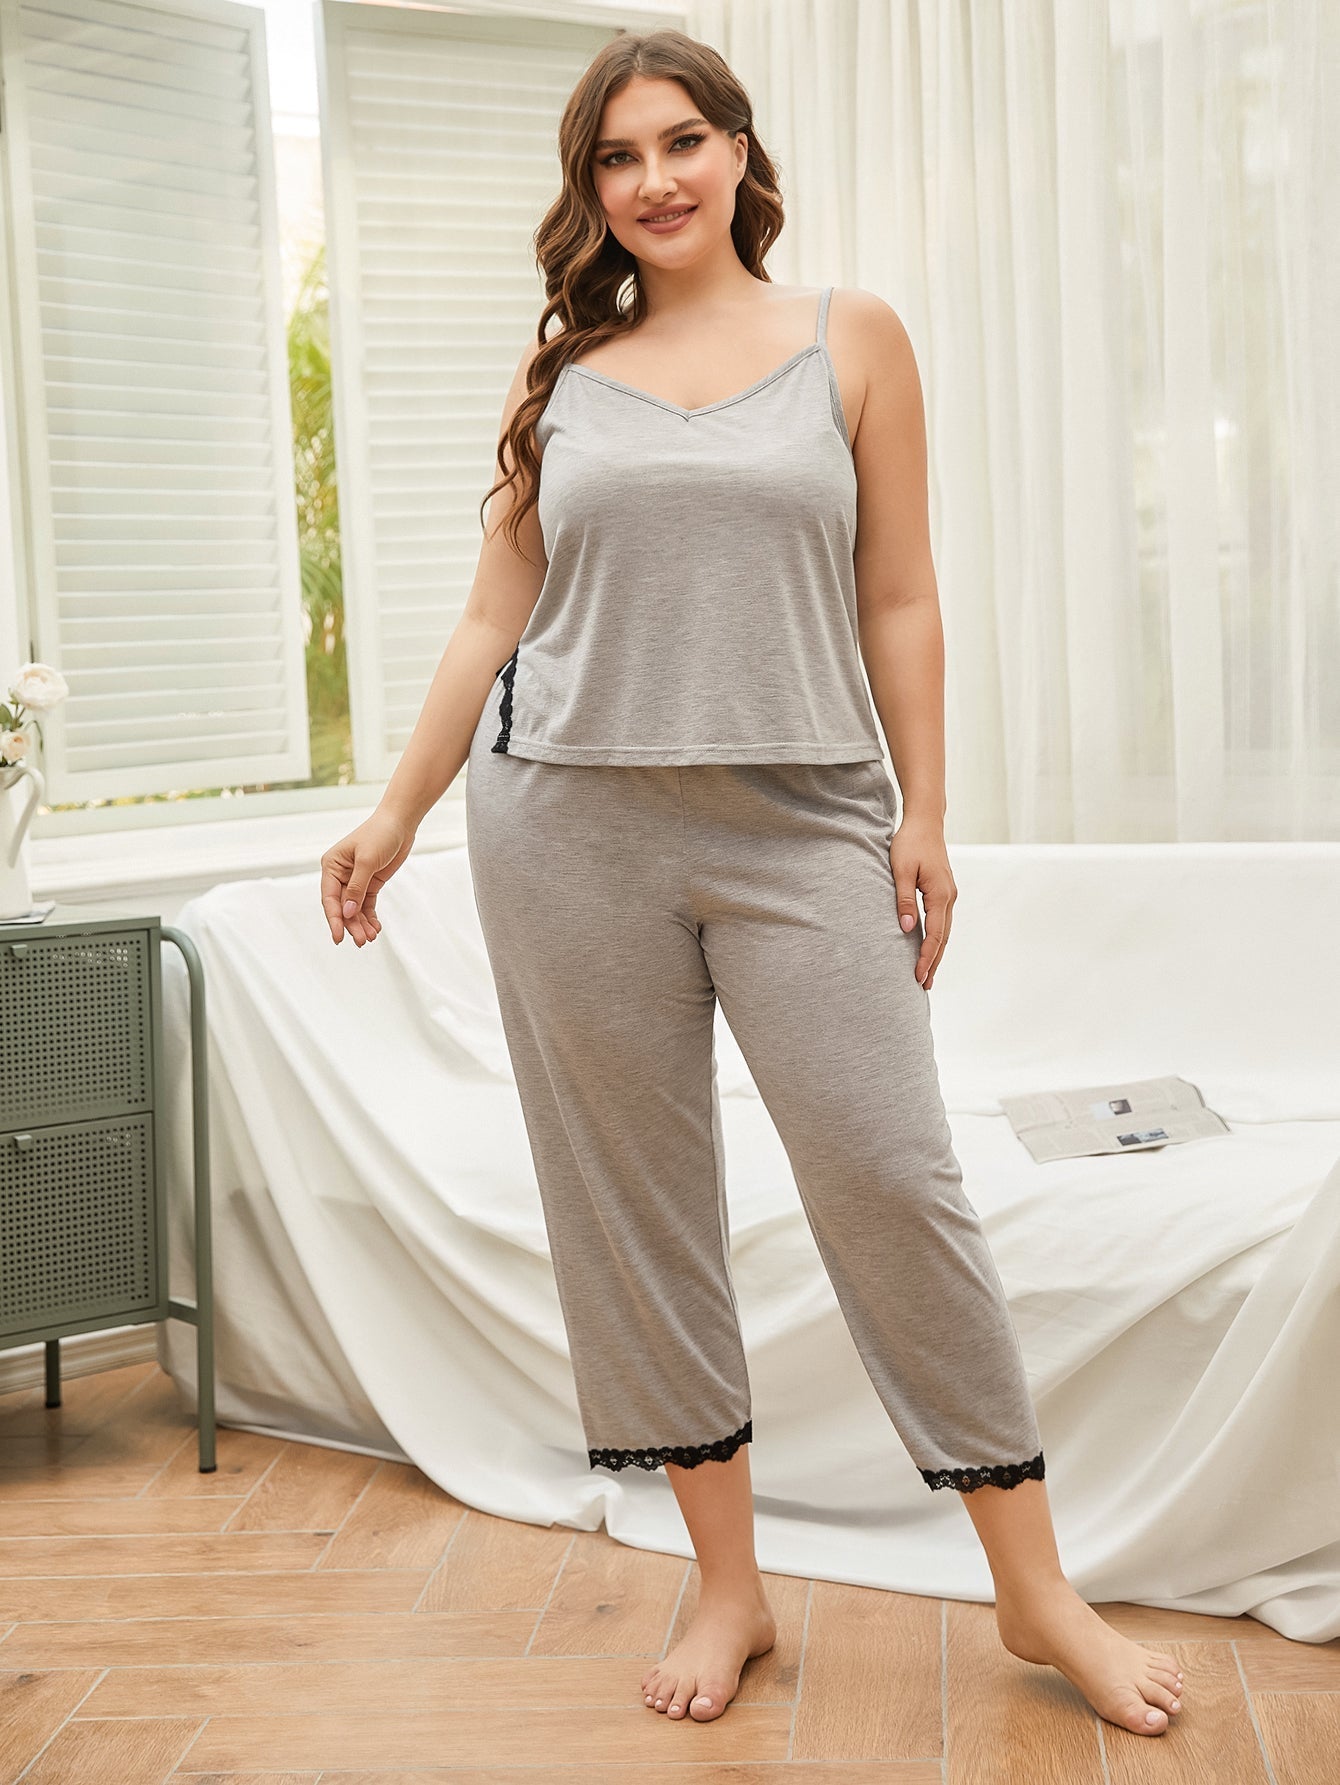 Women's Plus Size Pajamas Sets Cami Top and Pants  Casual Soft Sleepwear Sai Feel